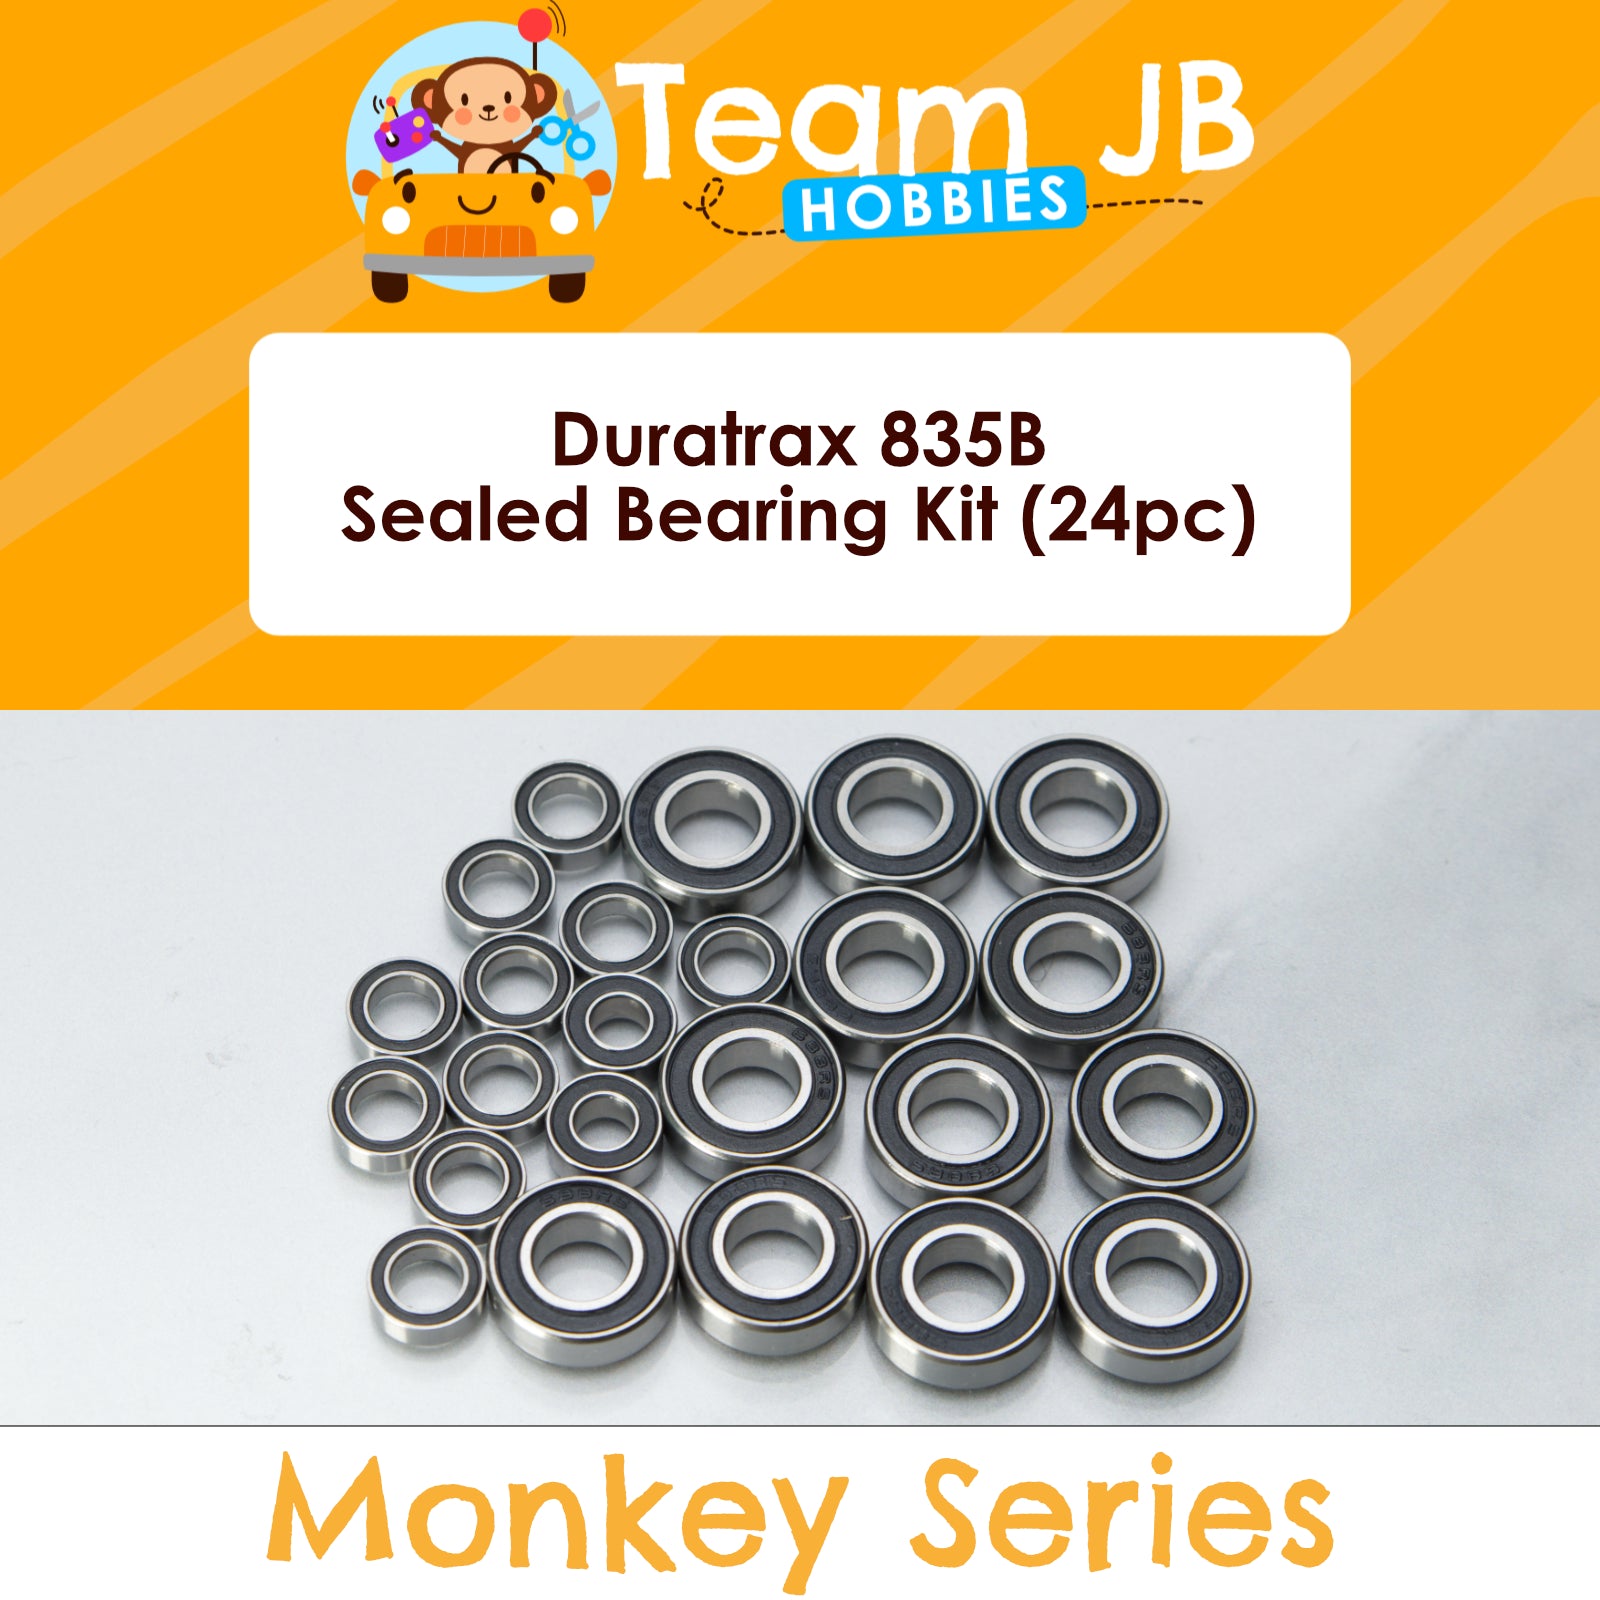 Duratrax 835B - Sealed Bearing Kit